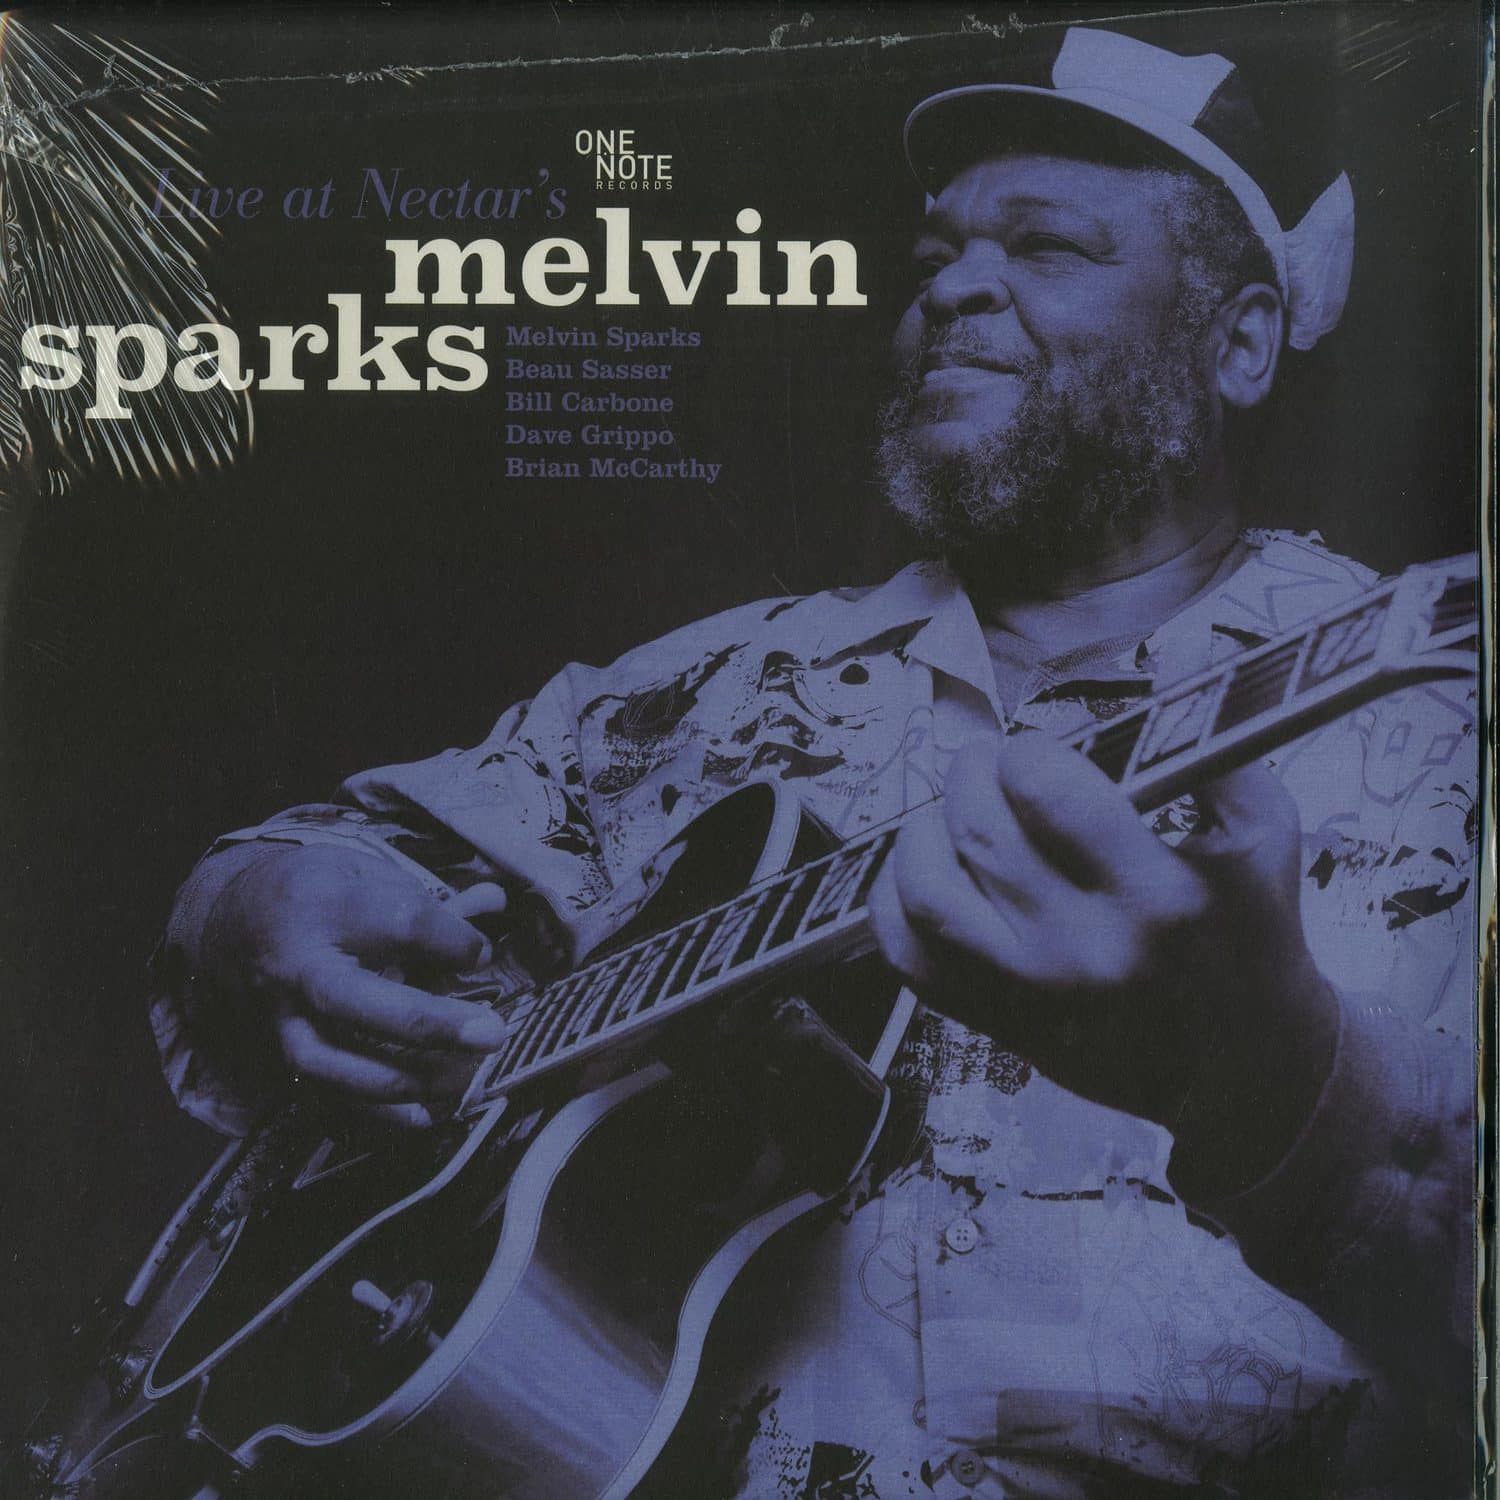 Melvin Sparks - LIVE AT NECTARS 